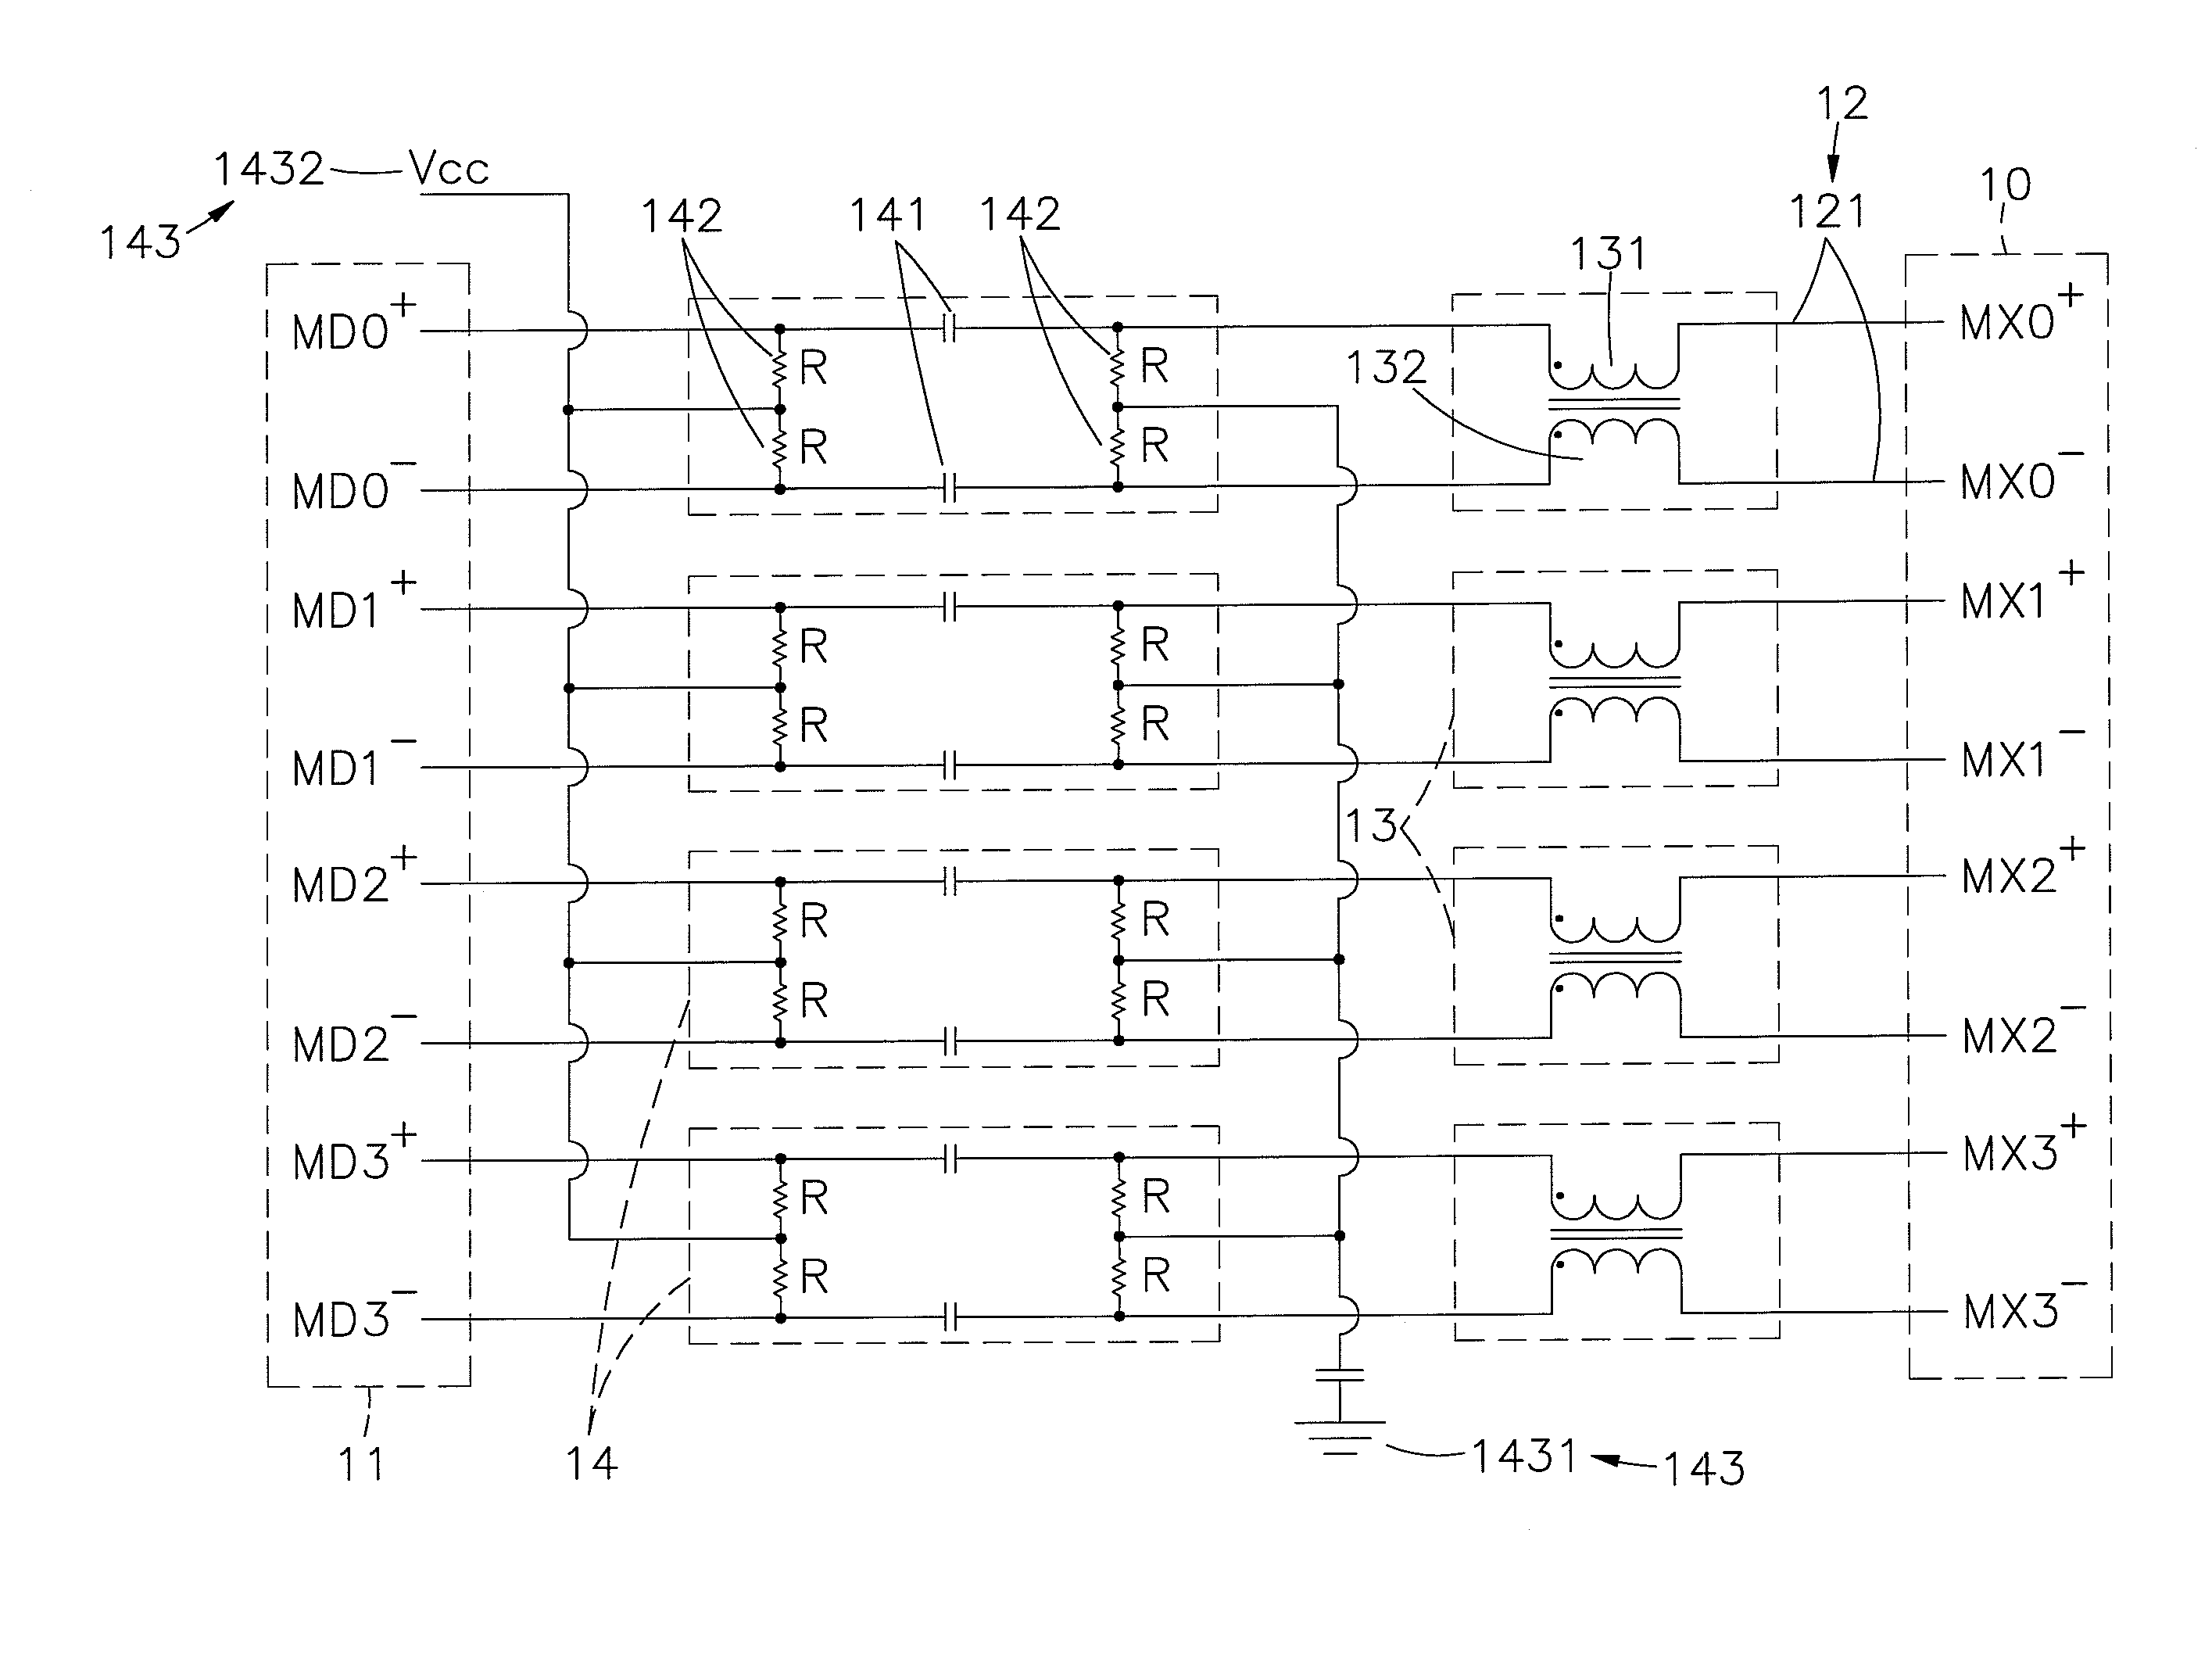 Network signal coupling circuit